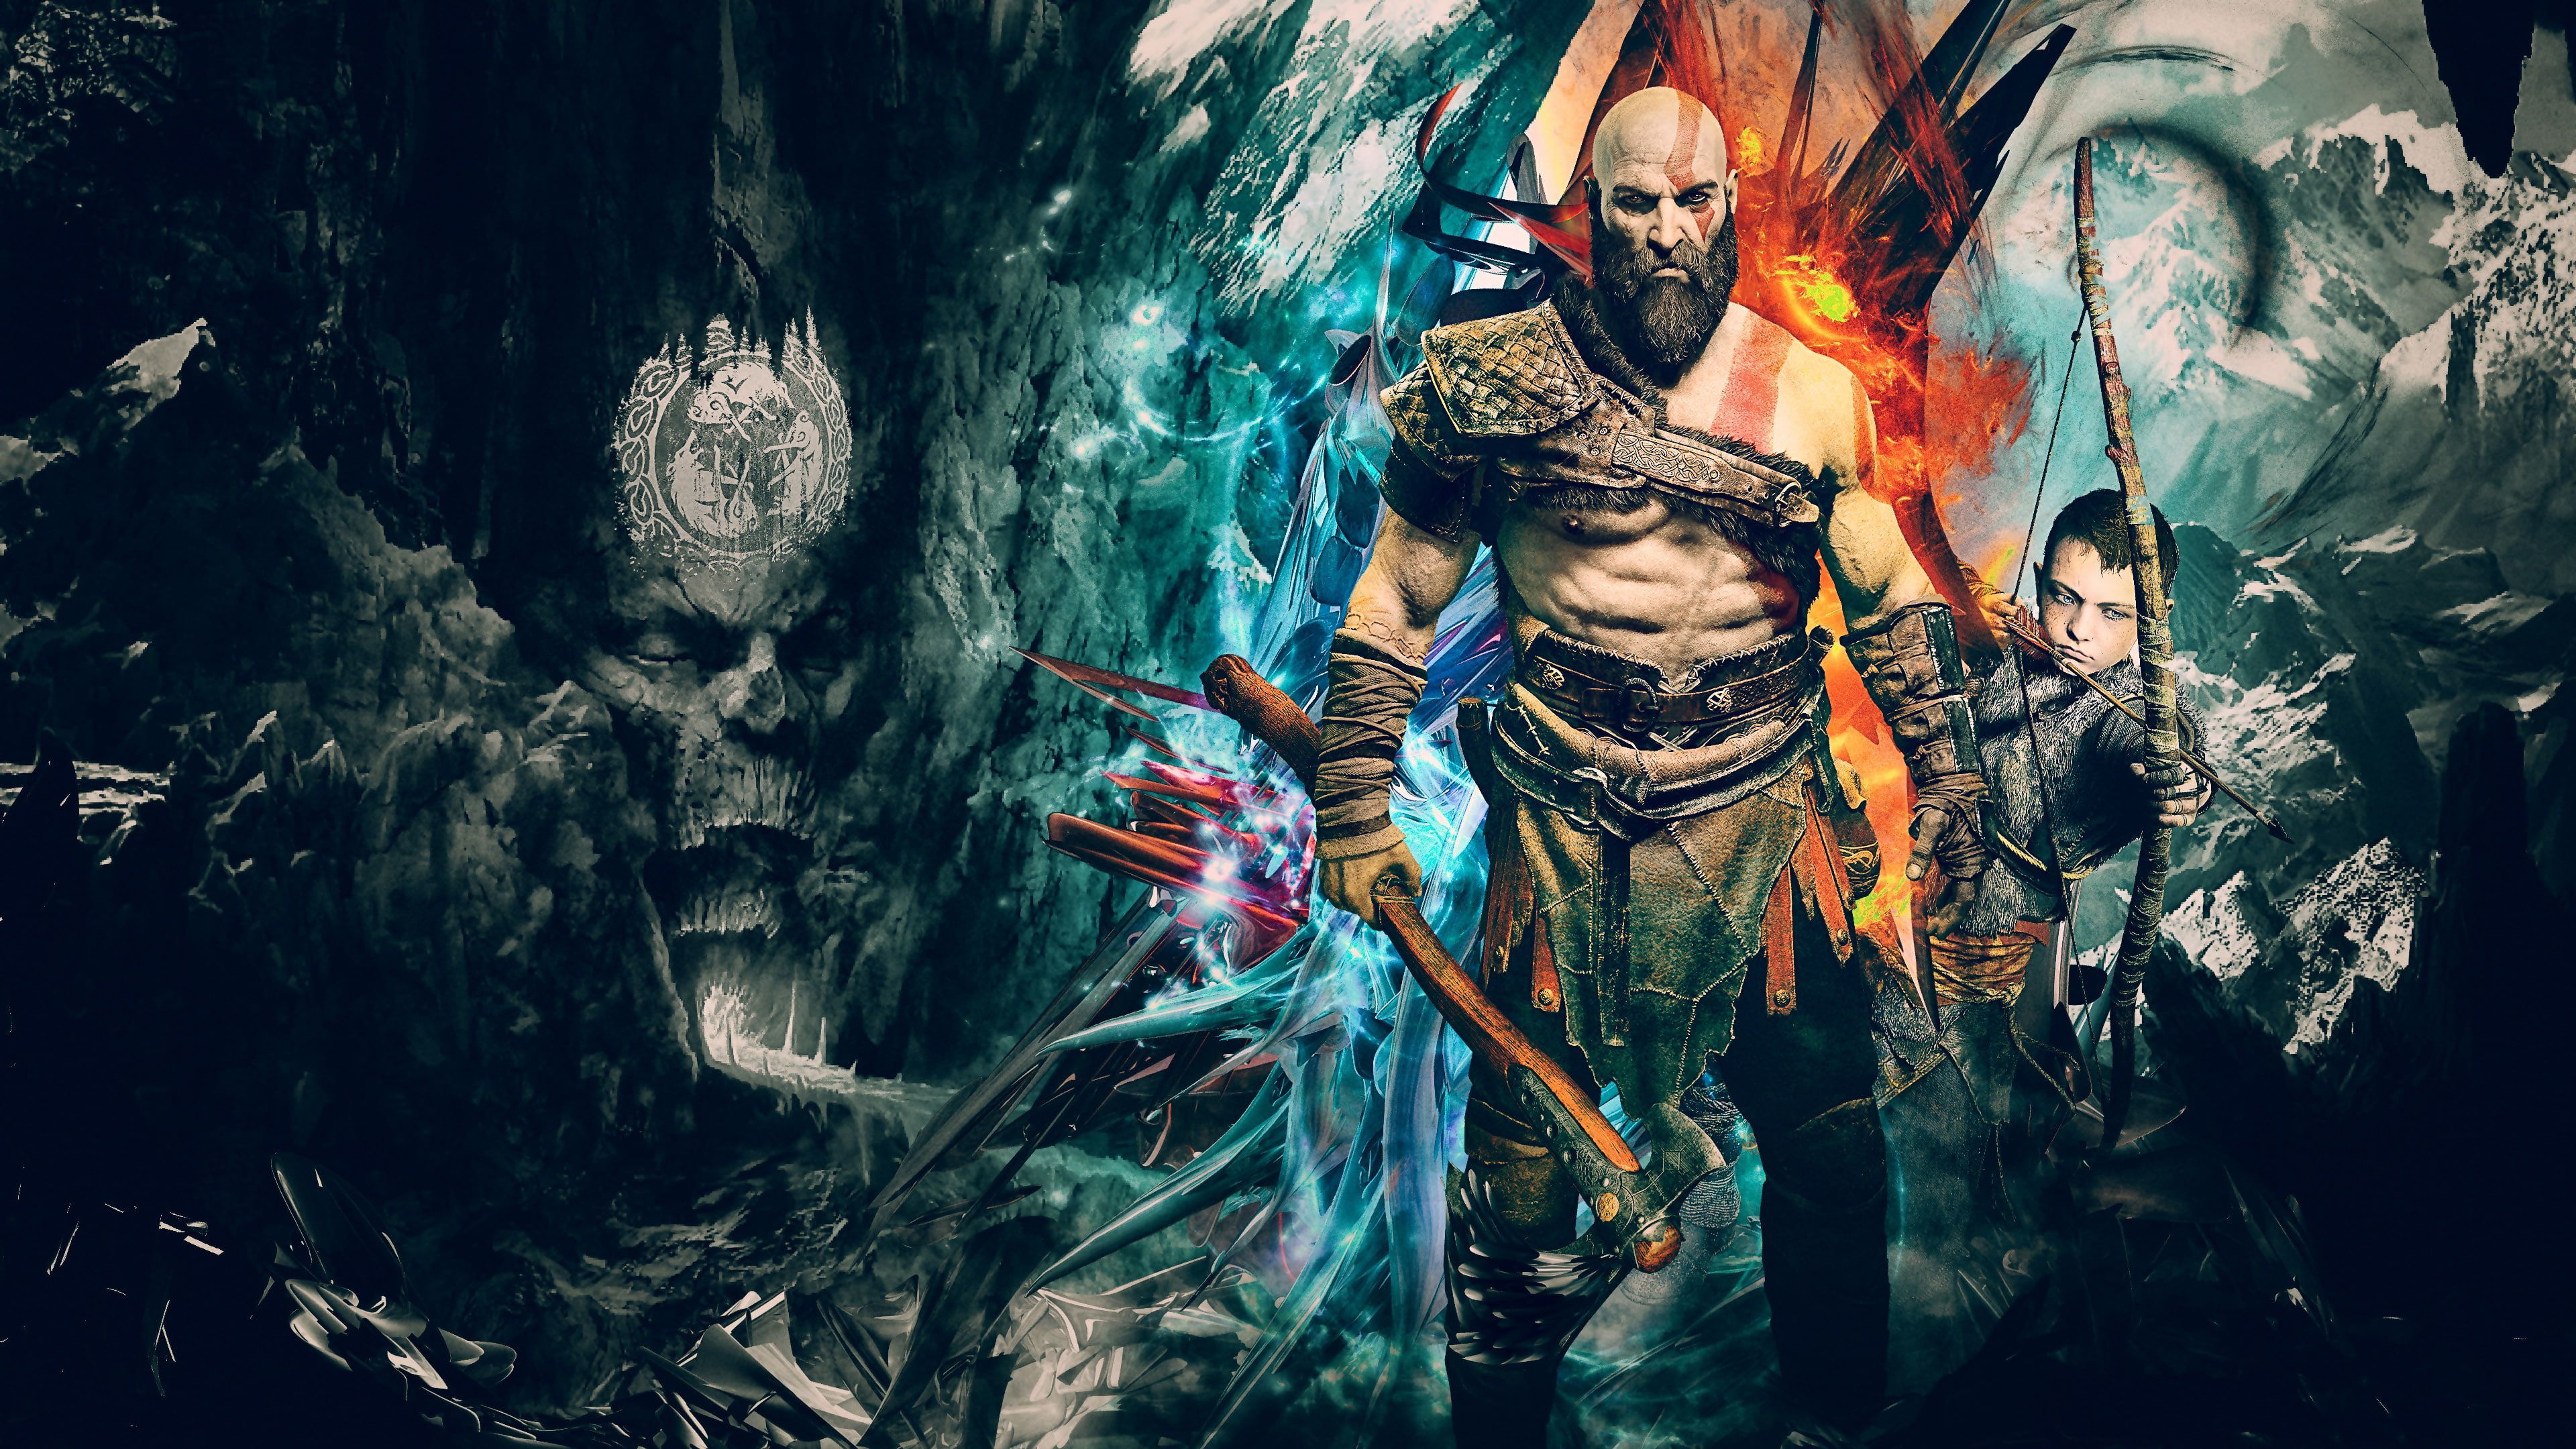 kratos god of war 4 god of war #games ps games #hd k #artwork K # wallpaper #hdwallpaper #desktop. Kratos god of war, Kratos wallpaper, God of war